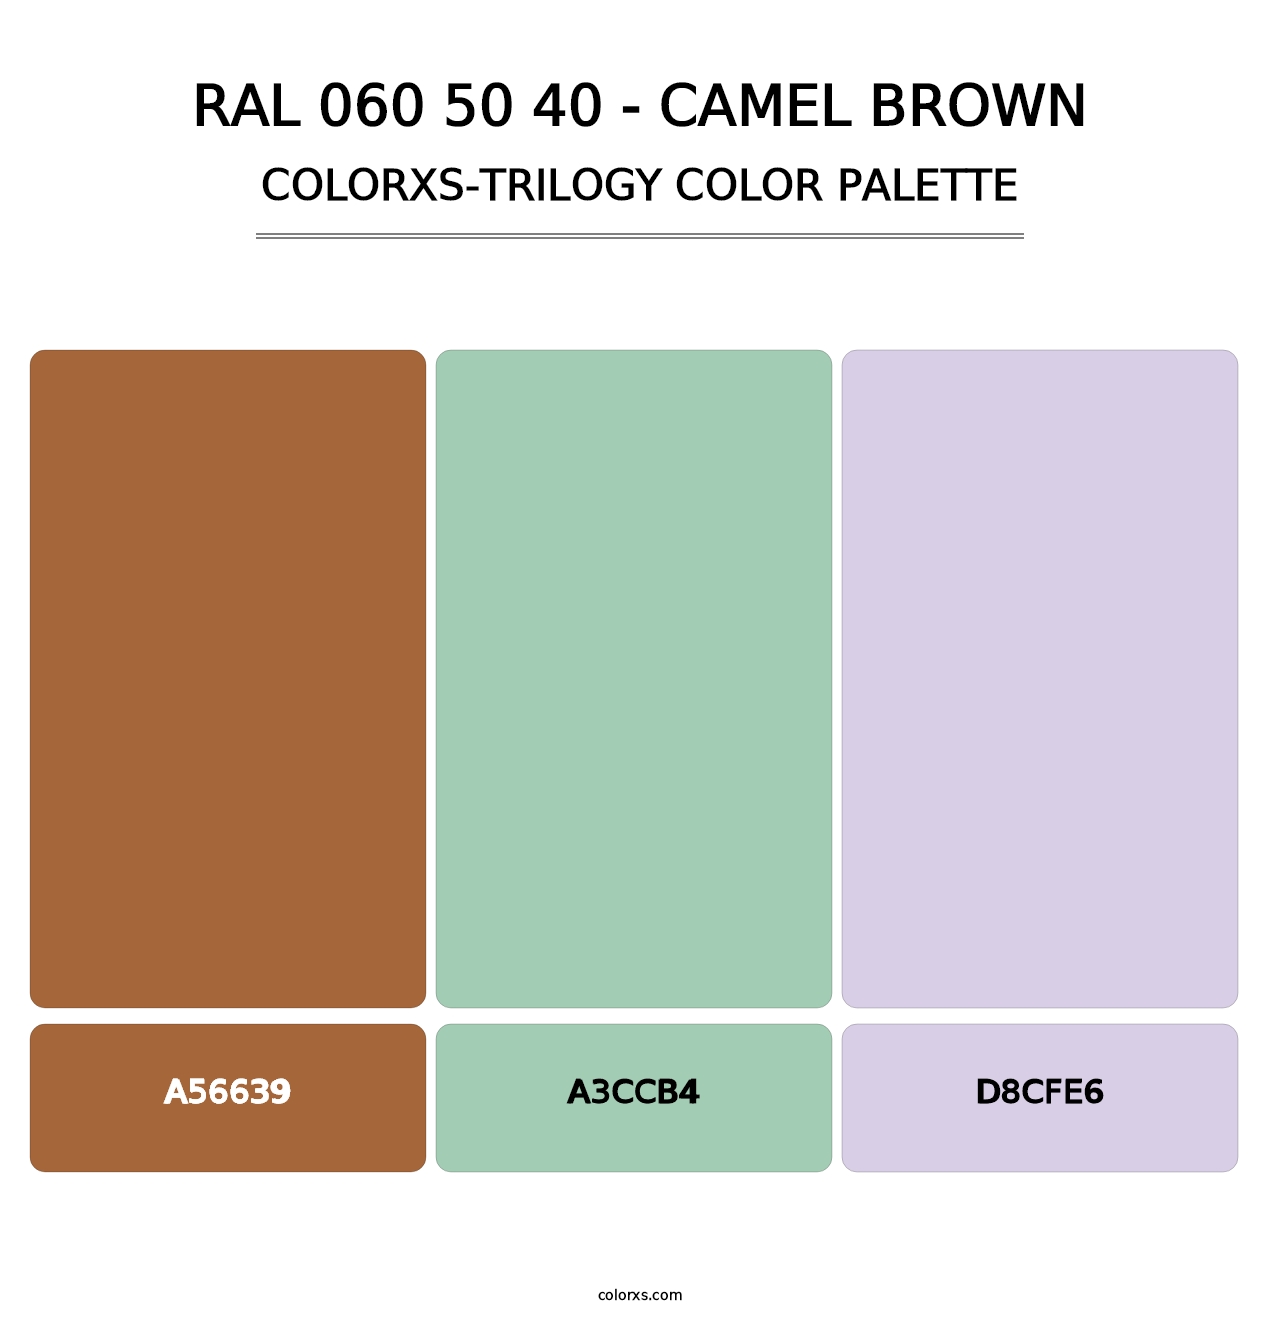 RAL 060 50 40 - Camel Brown - Colorxs Trilogy Palette